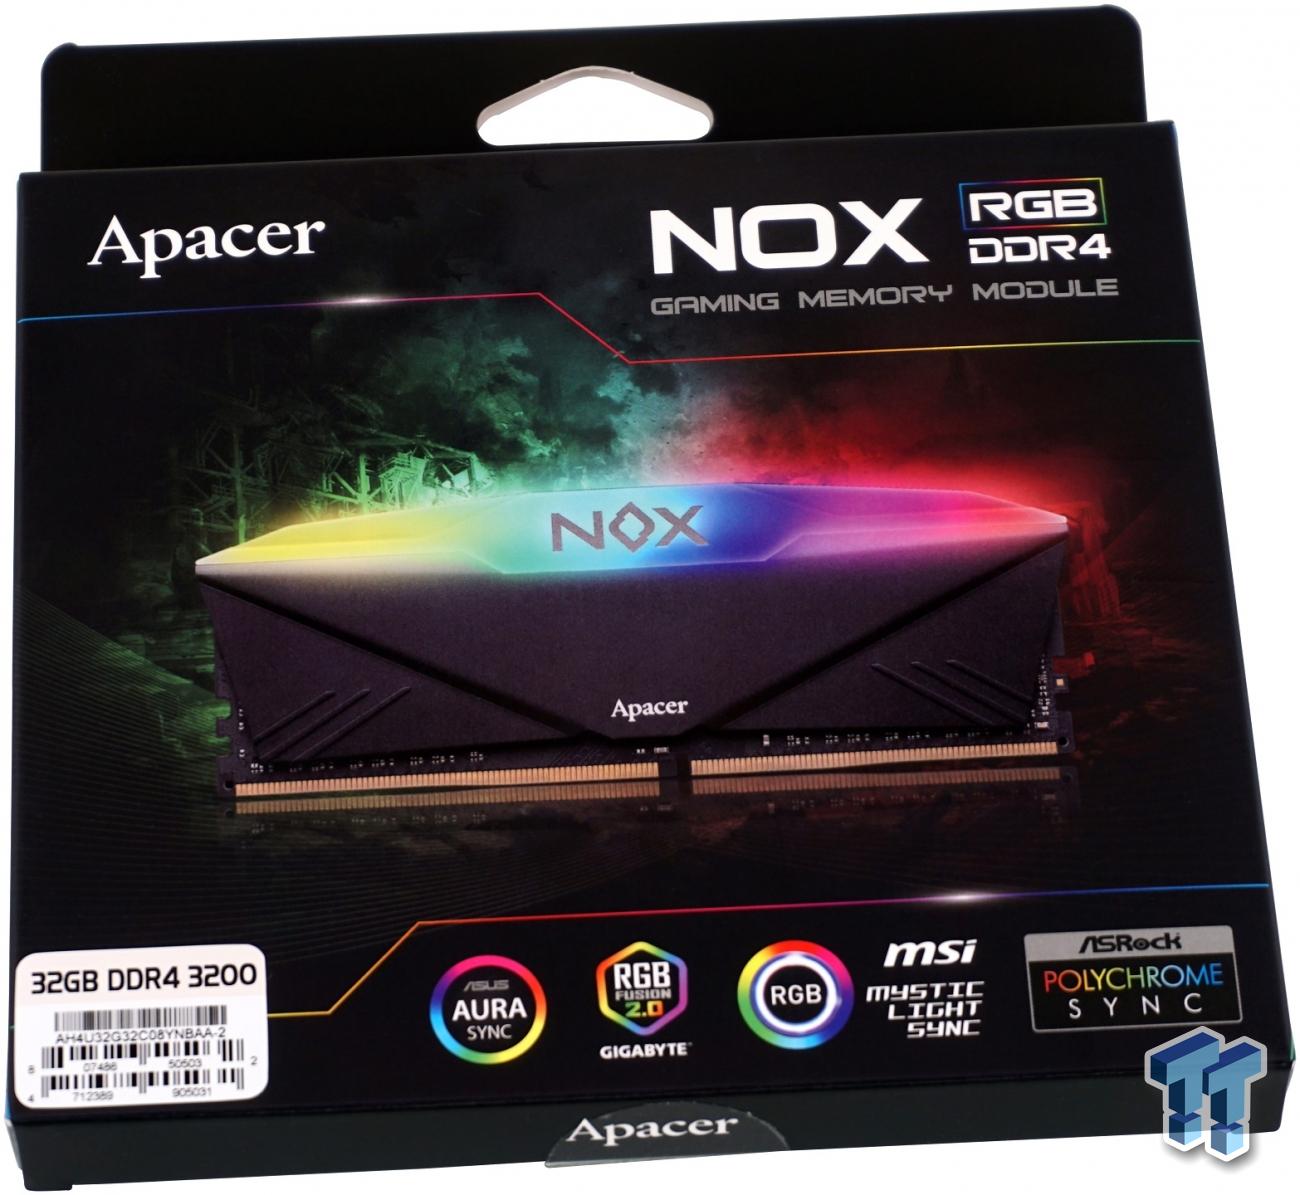 Apacer NOX RGB DDR43200 32GB Memory Kit Review TweakTown